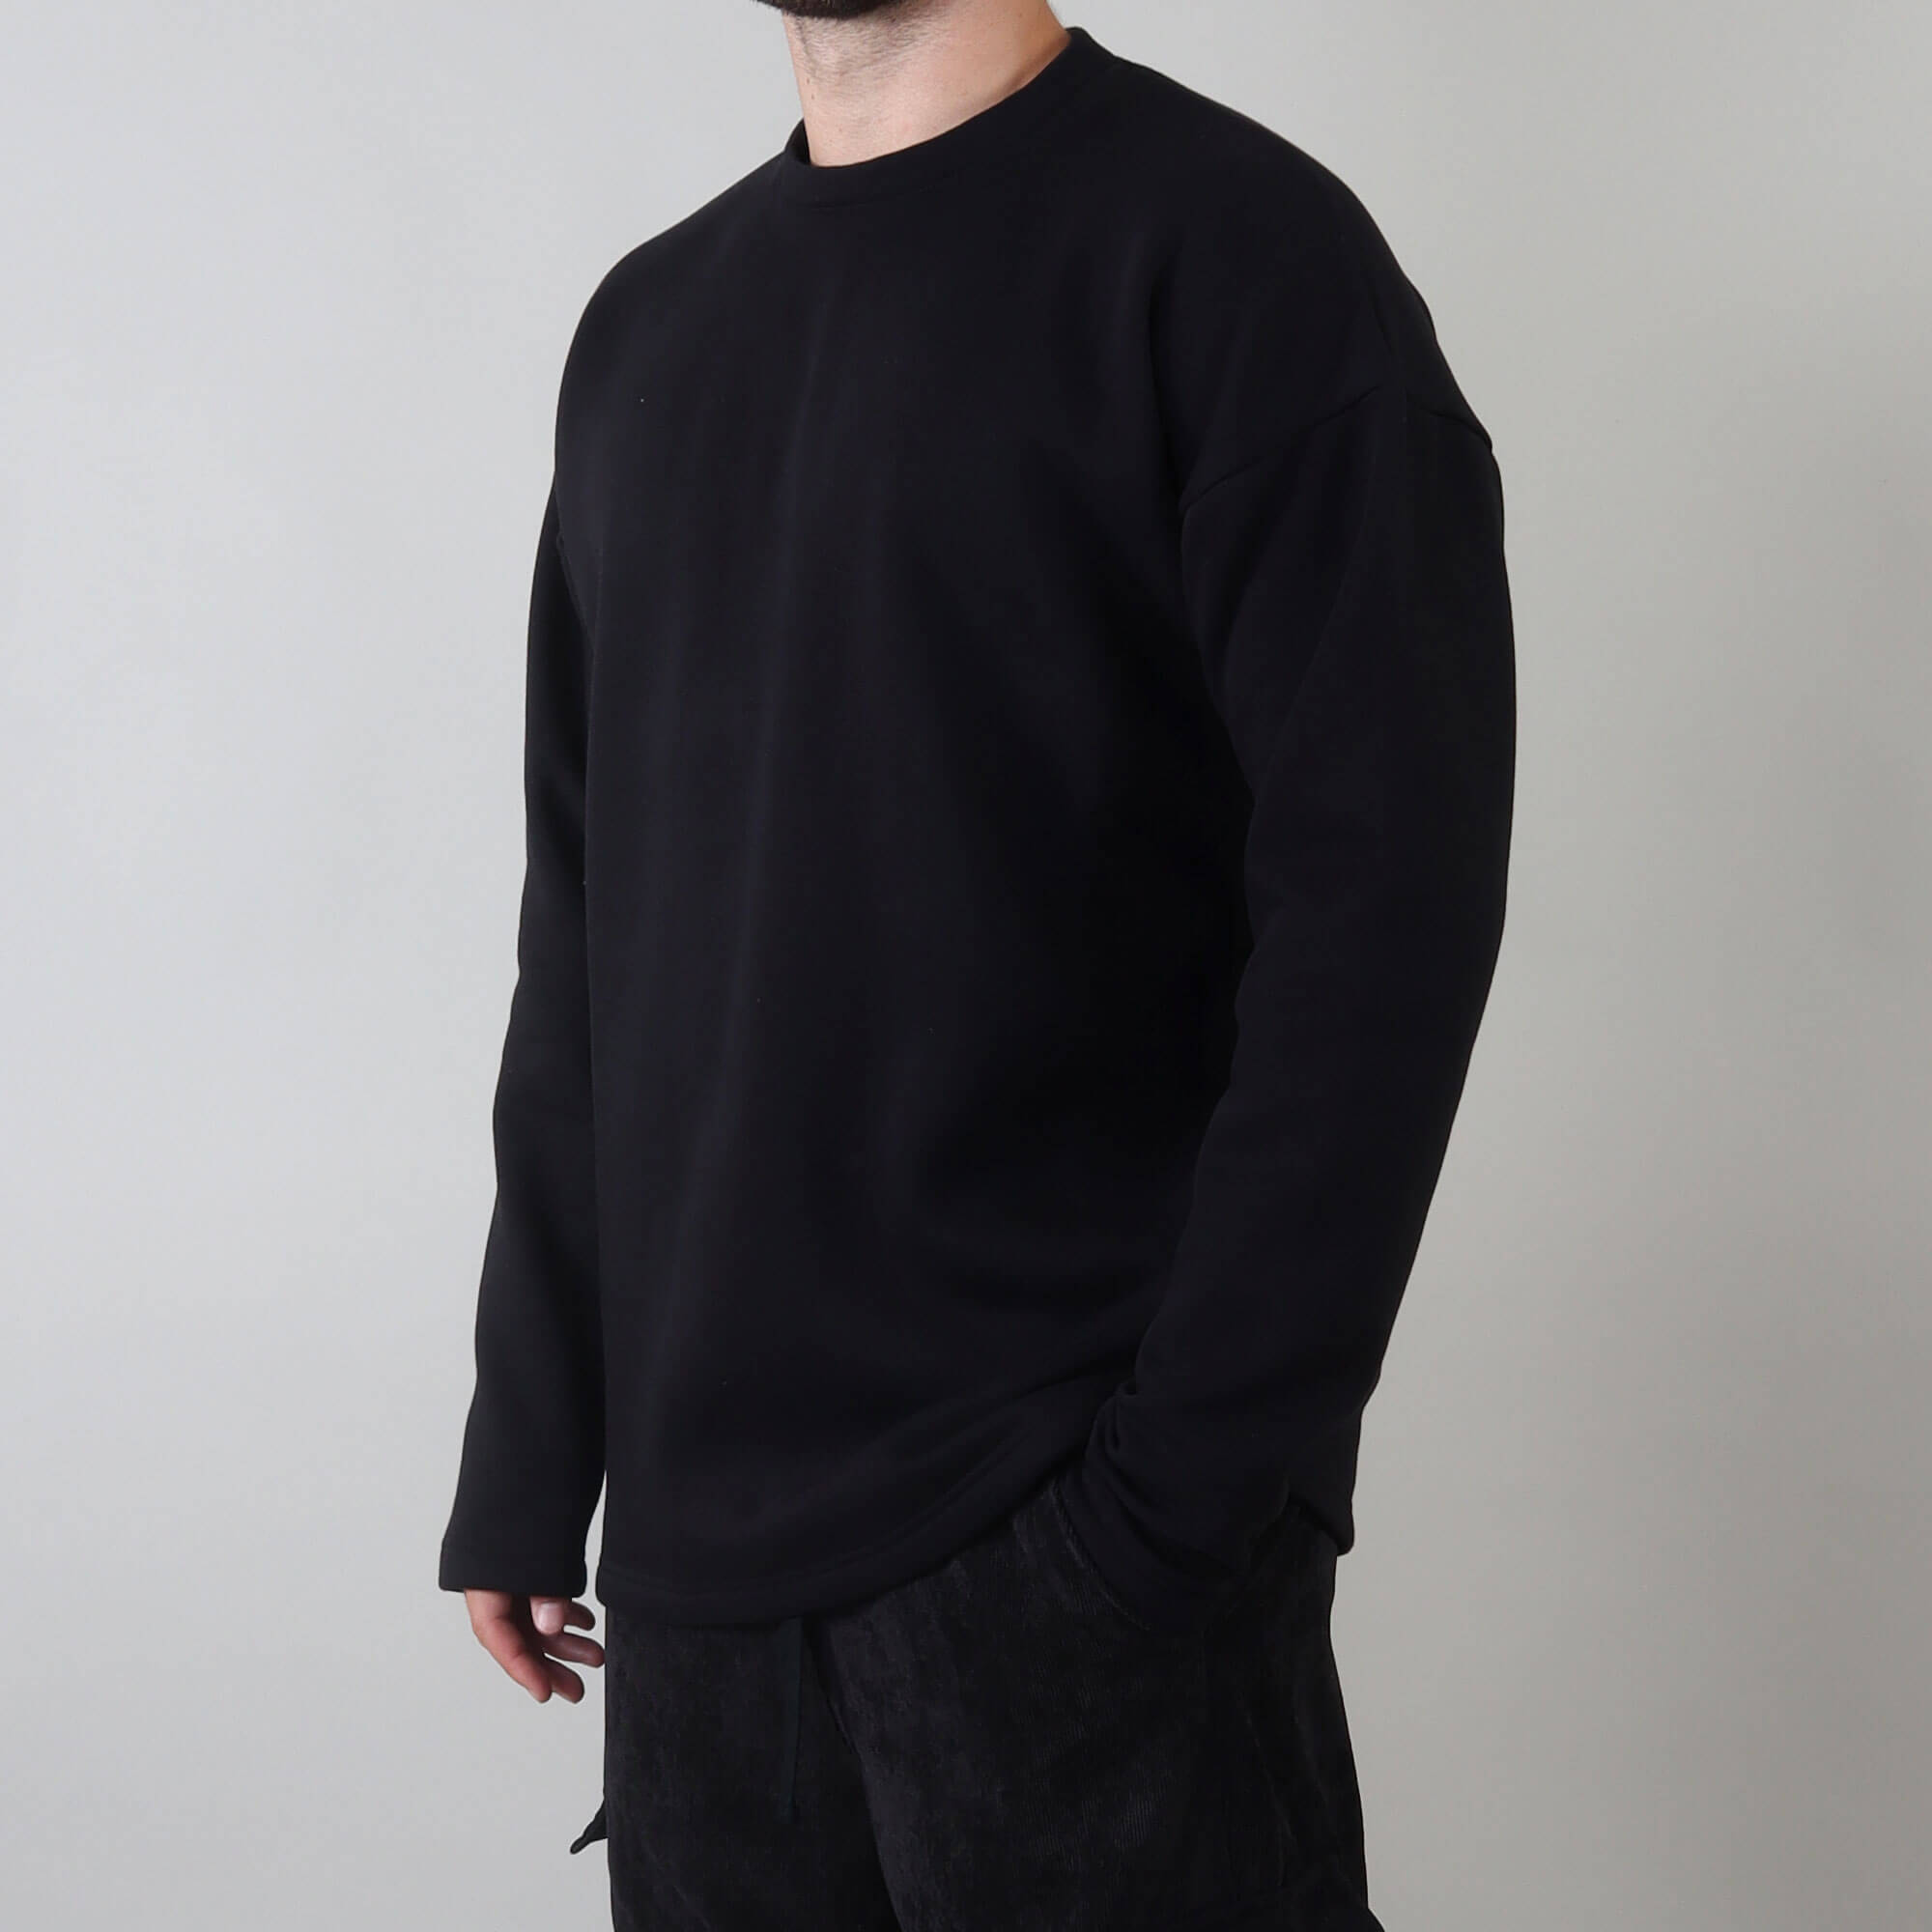 PRJCT sweater black